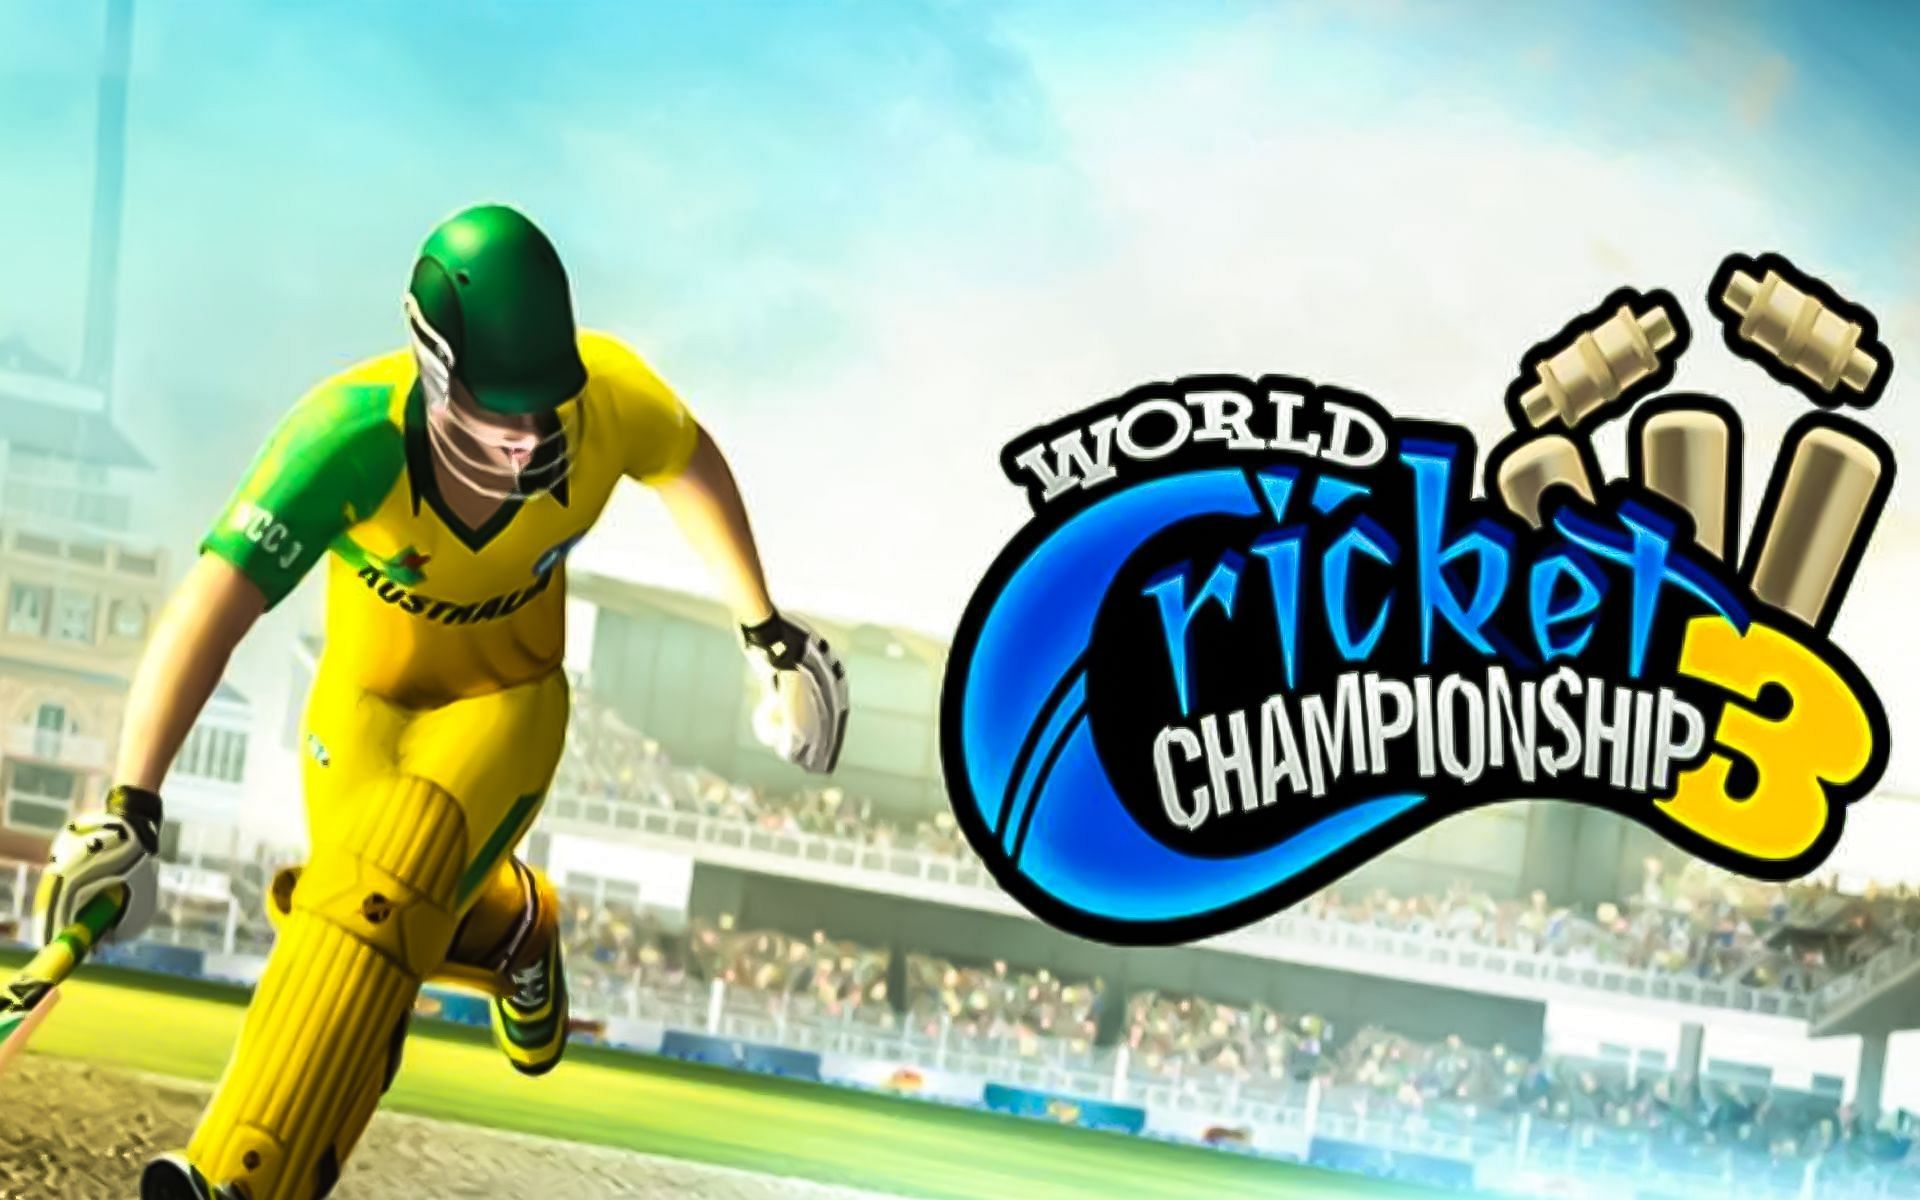 World Cricket Championship 3 (@worldcricchampofficial) • Instagram photos  and videos